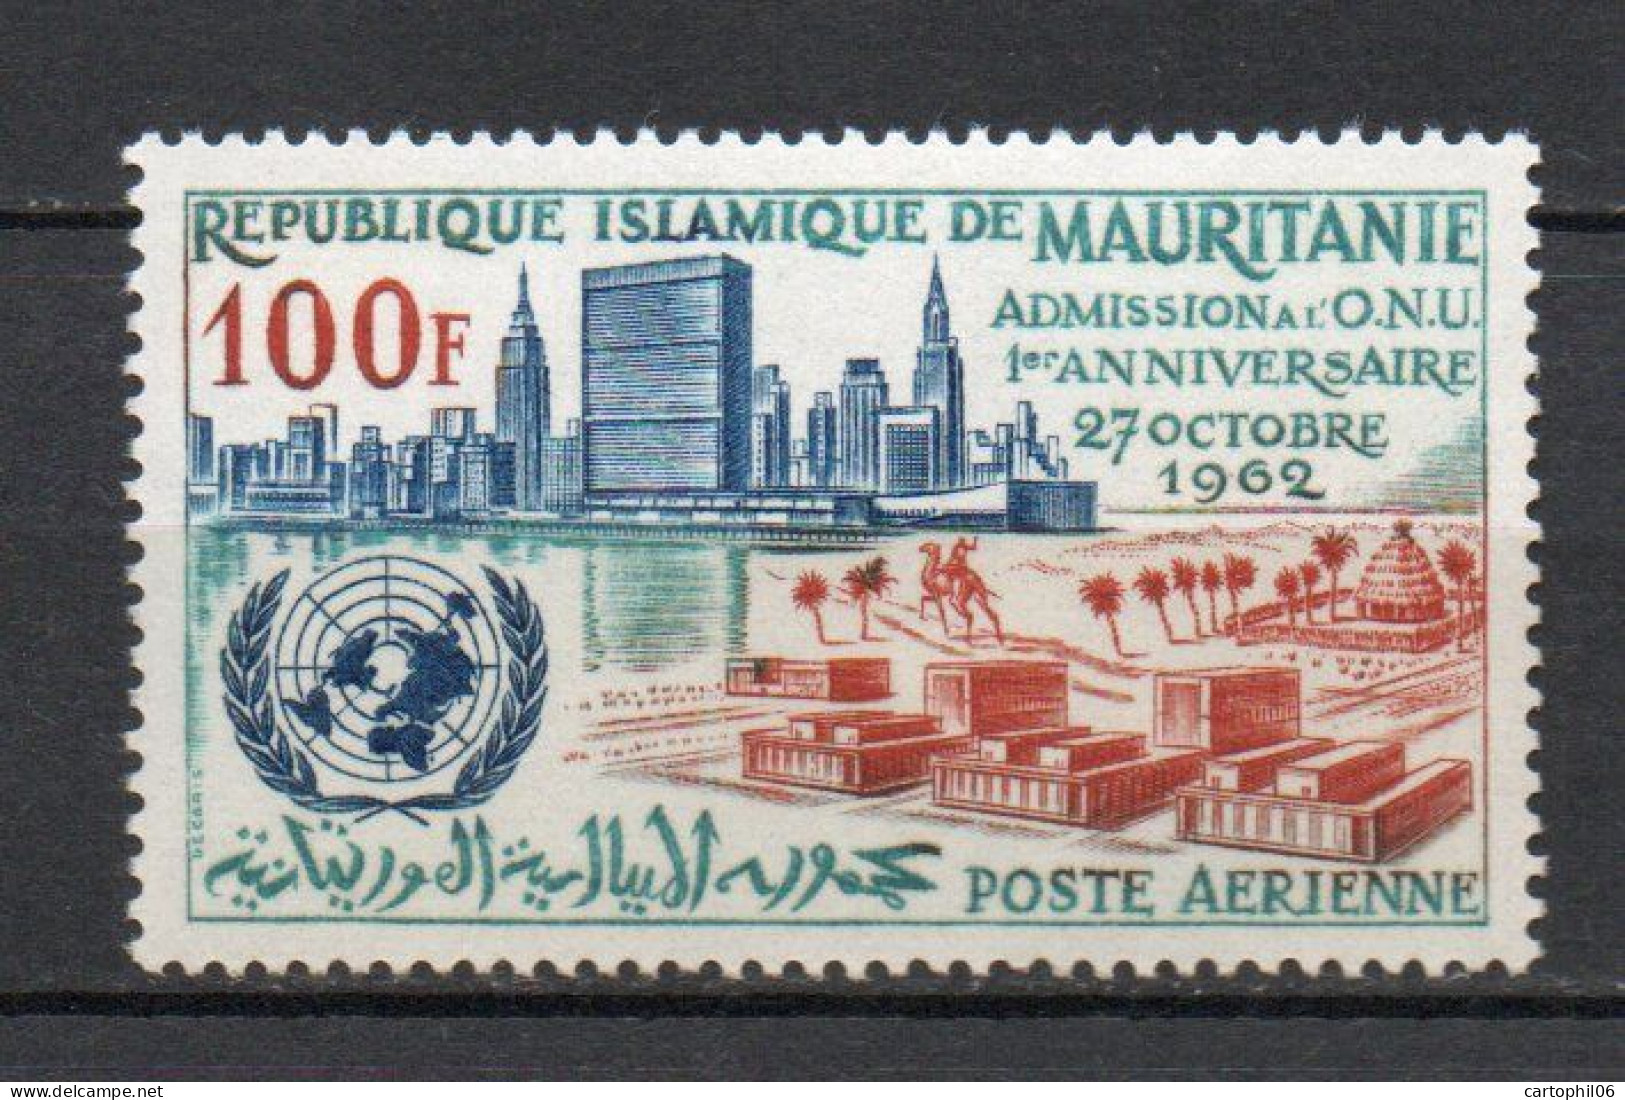 - MAURITANIE Poste Aérienne N° 22 Neuf ** MNH - 100 F. ADMISSION AUX NATIONS UNIES 1962 - - Mauretanien (1960-...)